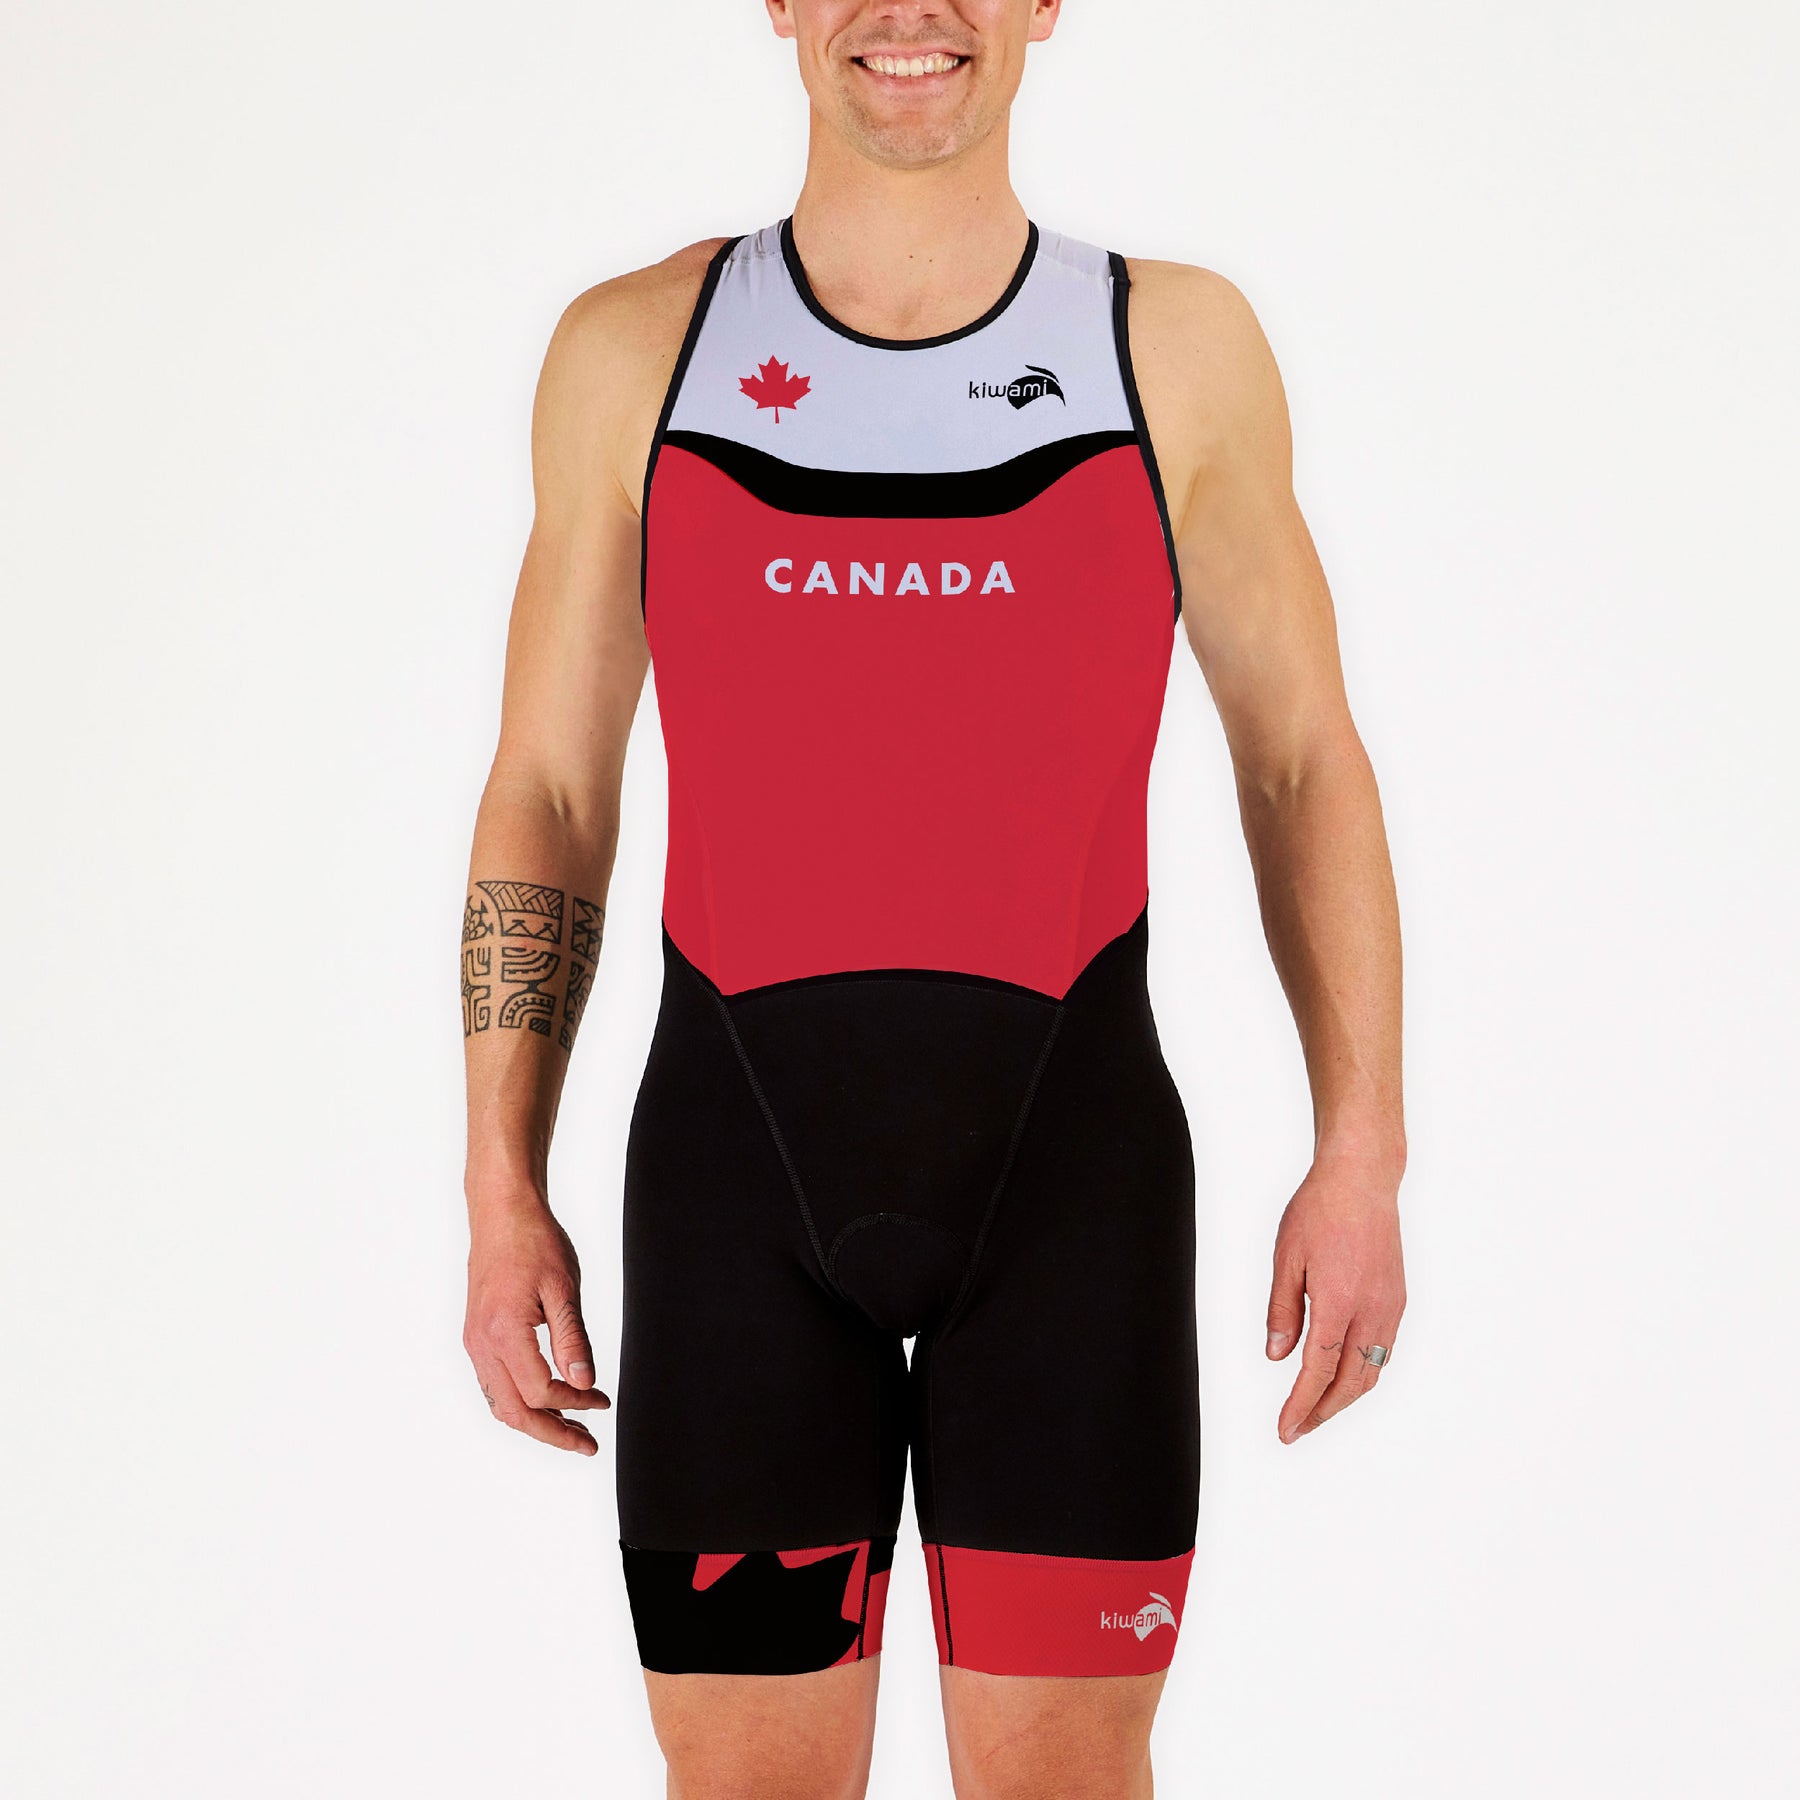 canada triathlon suit custom trisuit world triathlon canada ITU kiwami sports combinaison de triathlon personnalisée